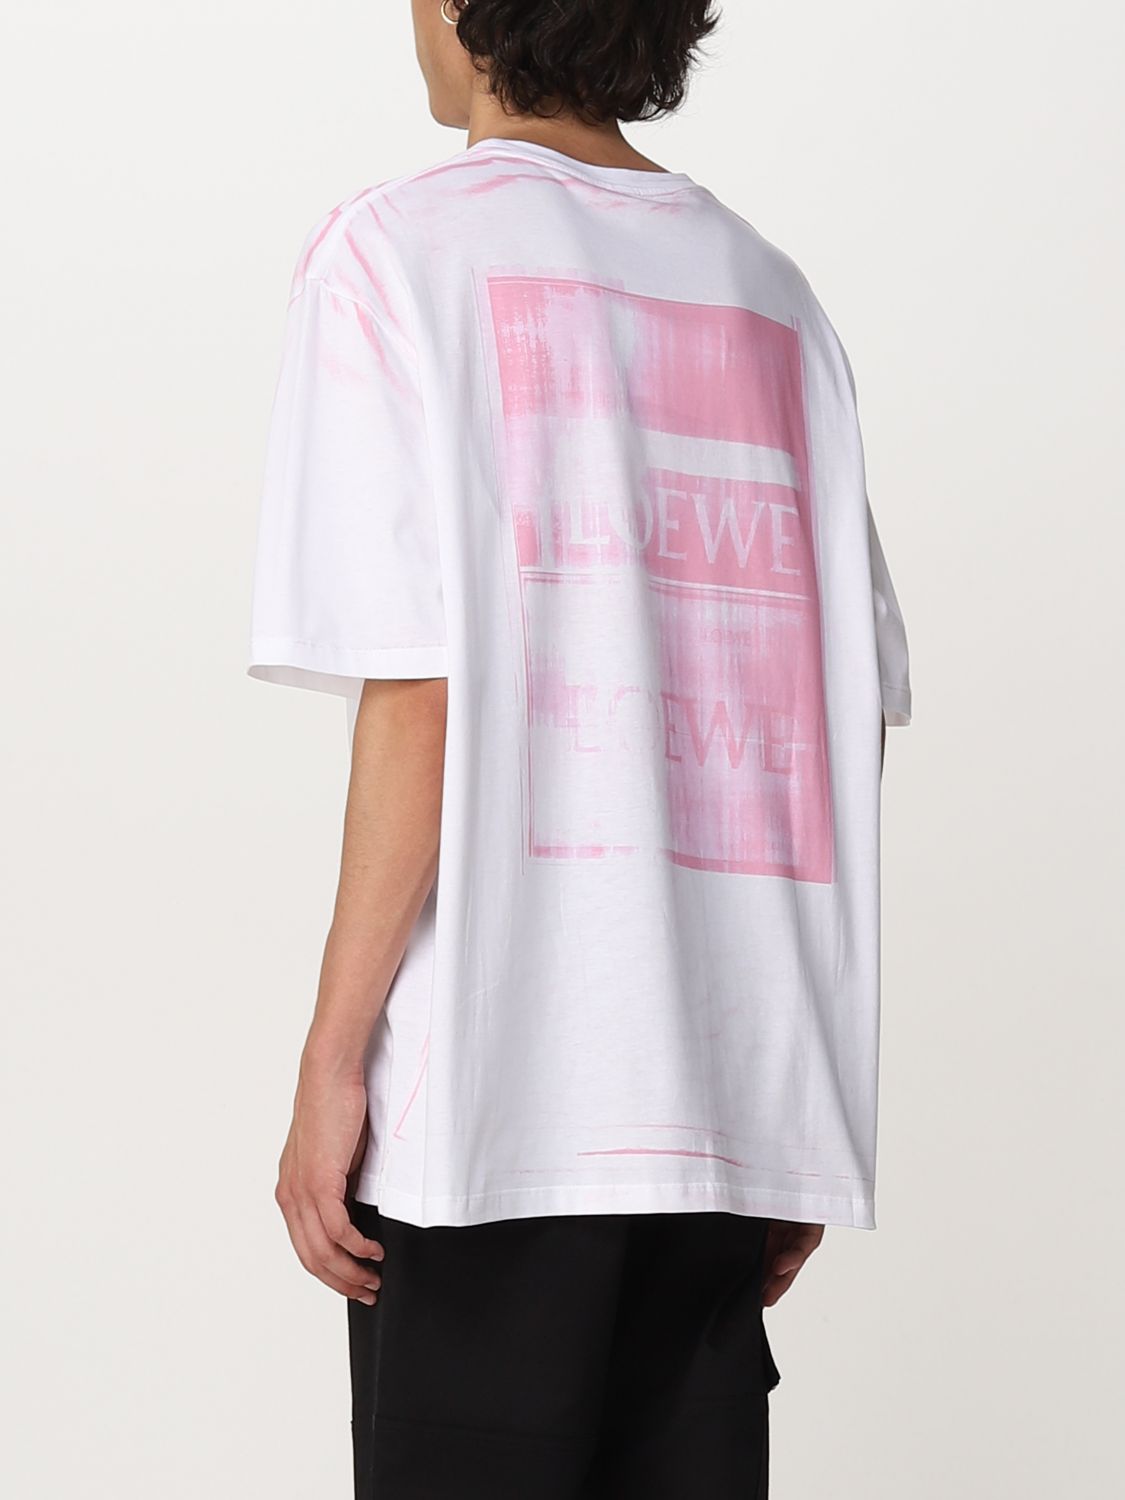 LOEWE: t-shirt for man - White | Loewe t-shirt H526Y22X27 online on ...